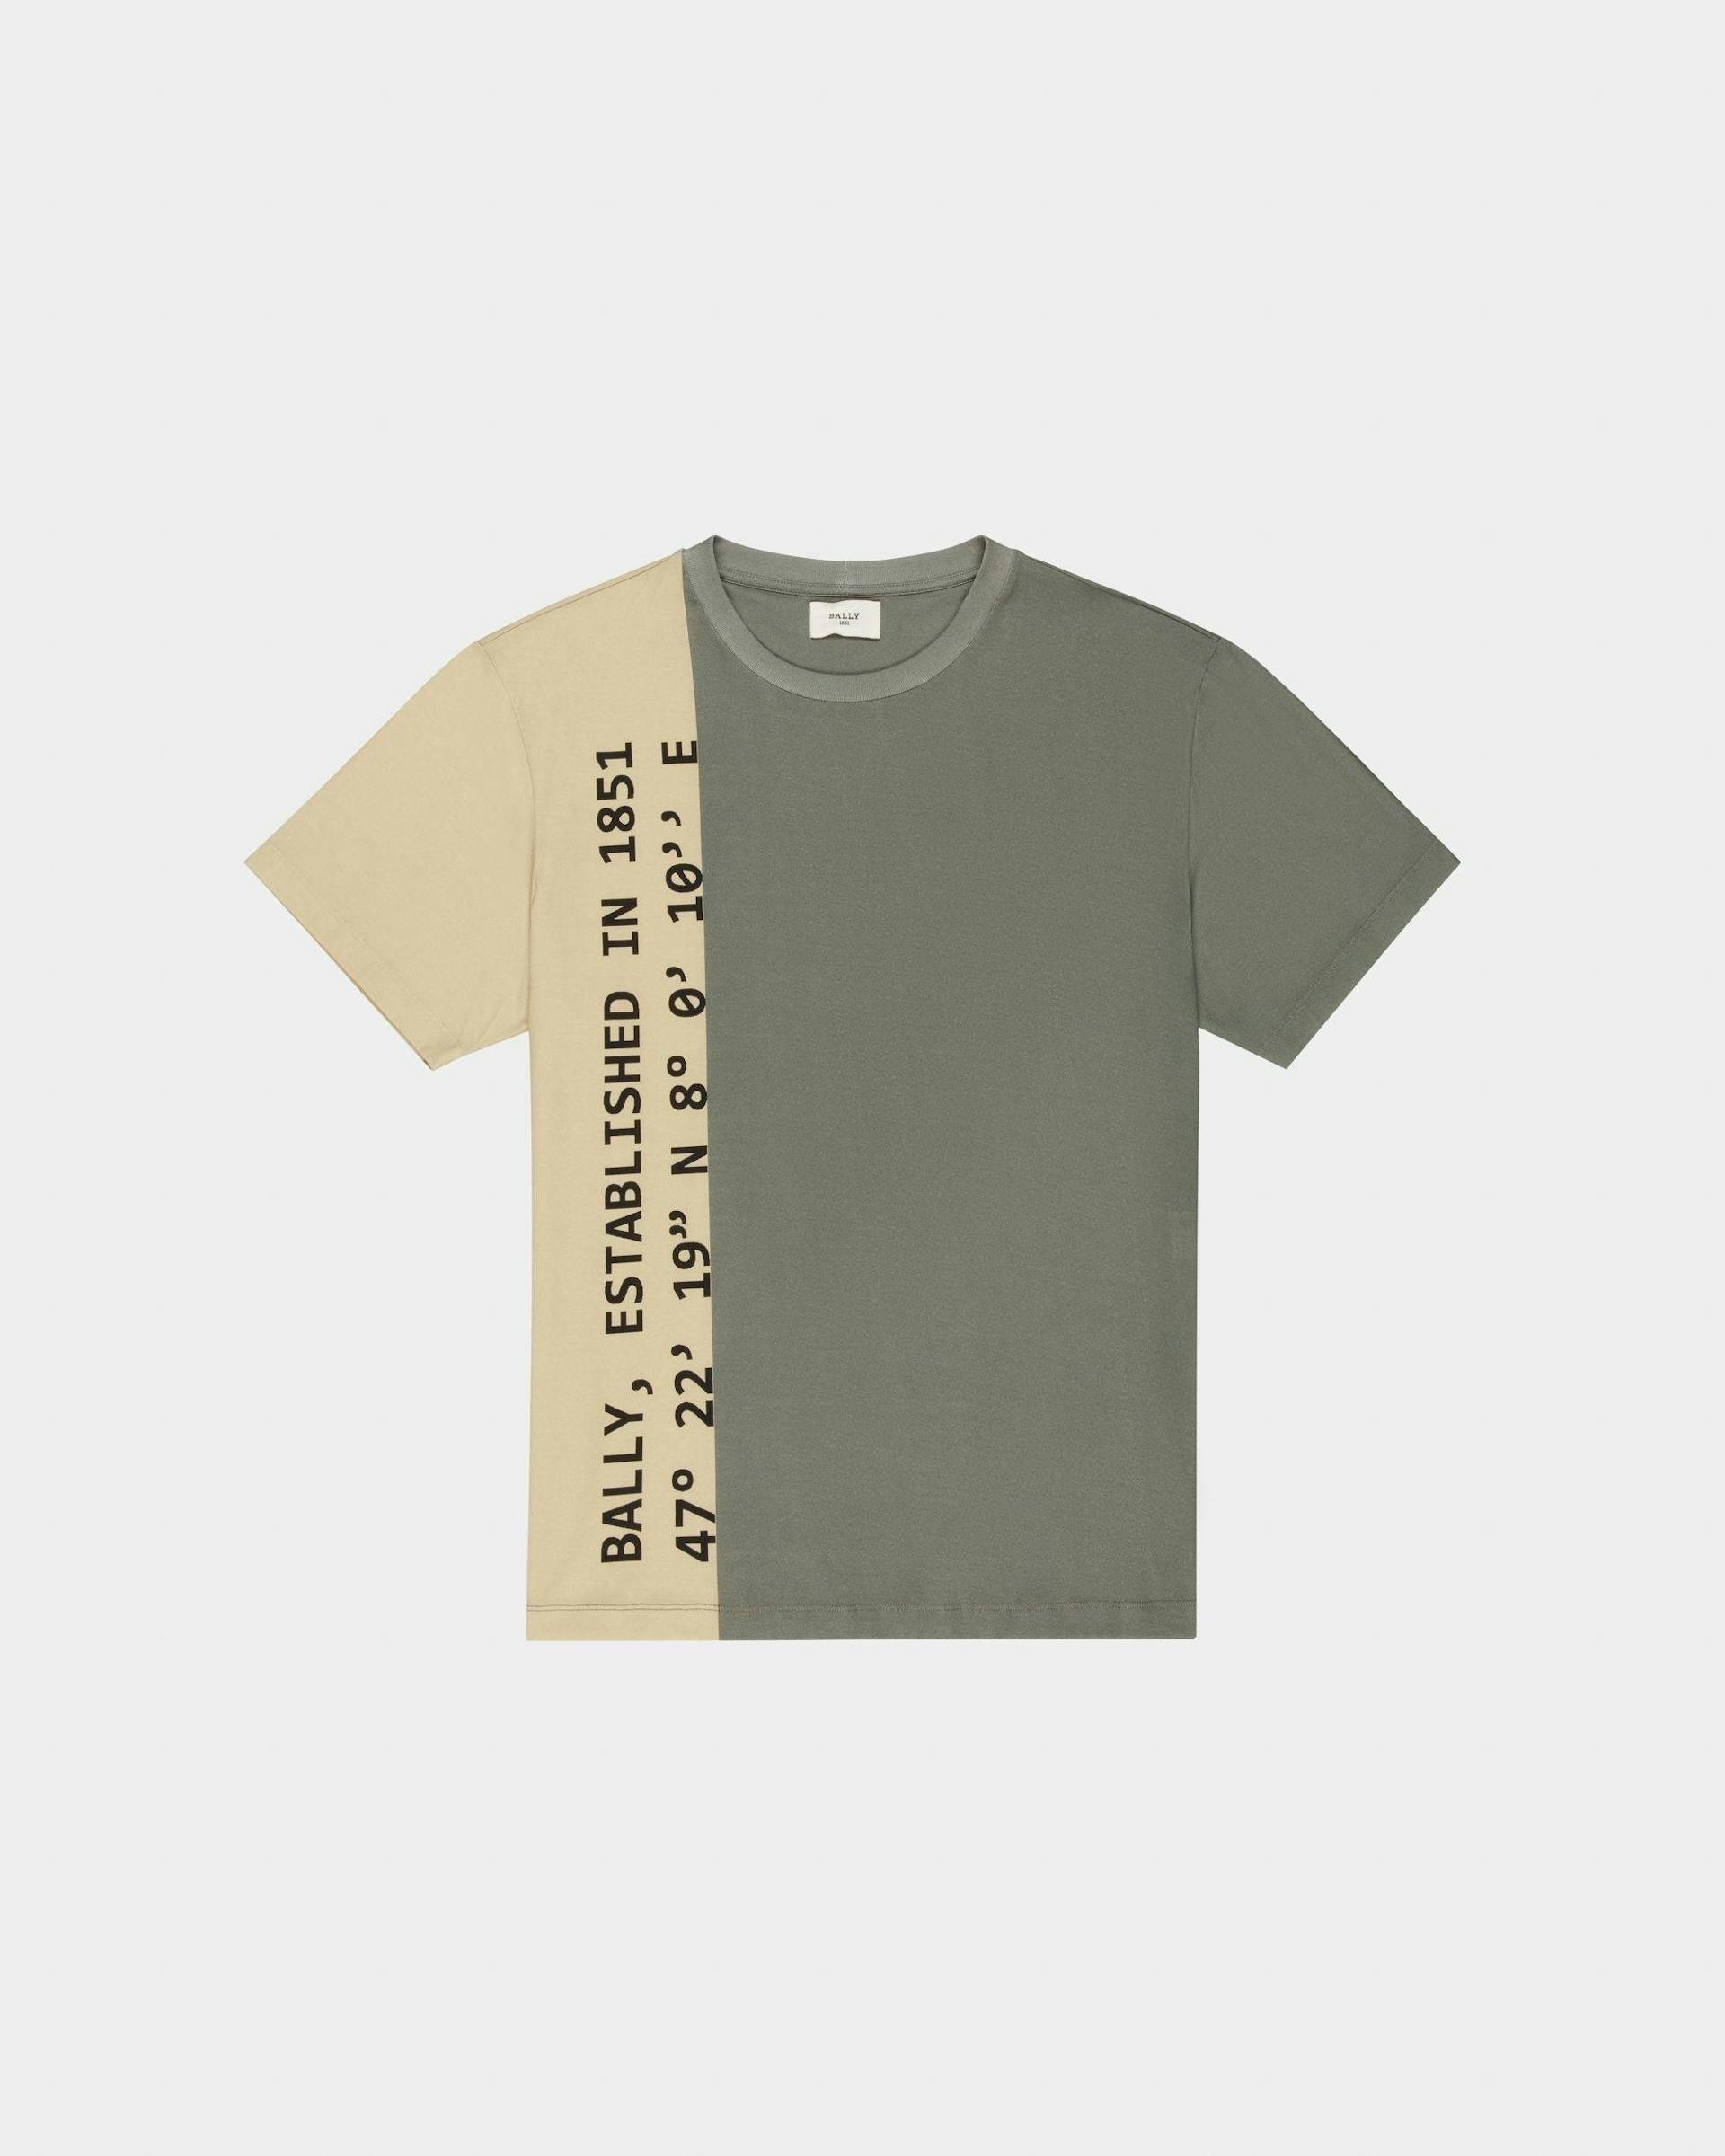 Organic Cotton T-Shirt In Beige & Green - Men's - Bally - 01